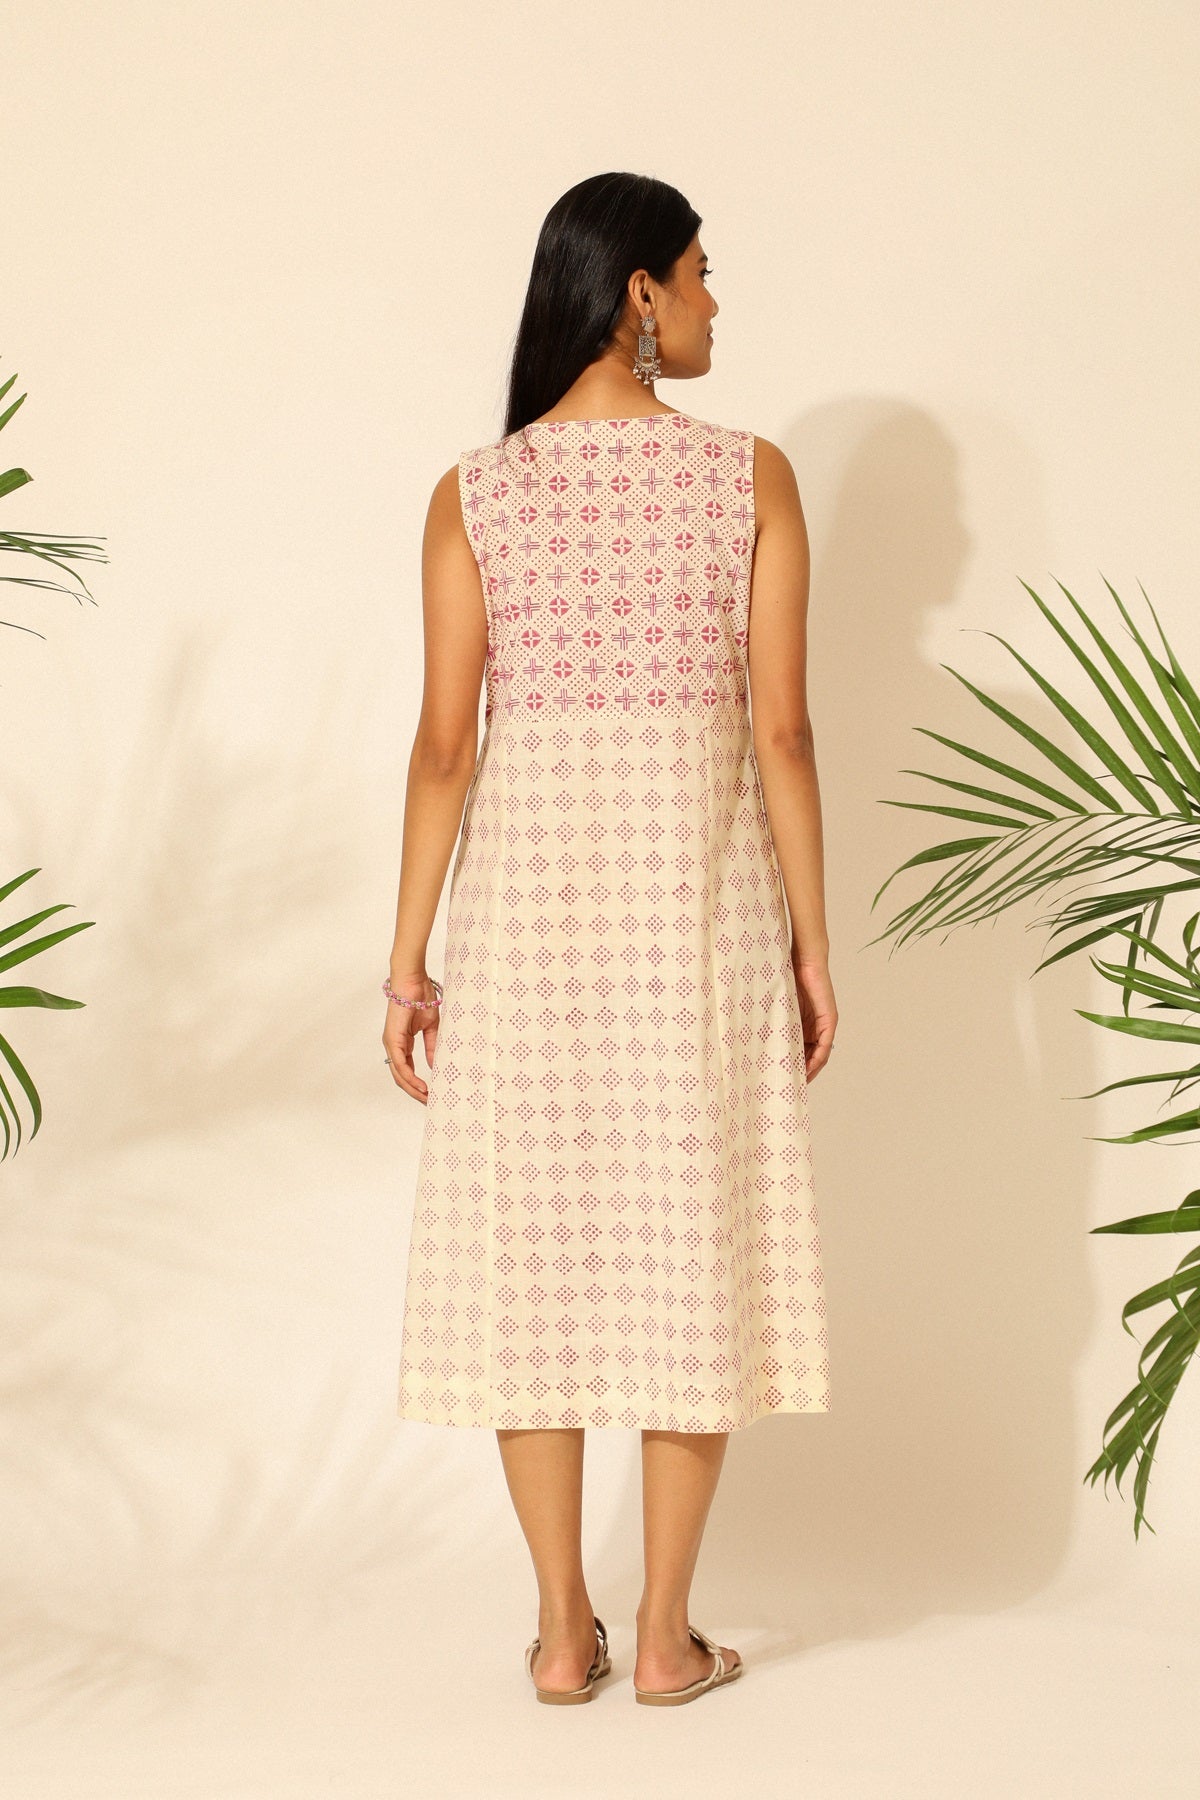 Tiera White And Pink Blockprinted Sleeveless Dress